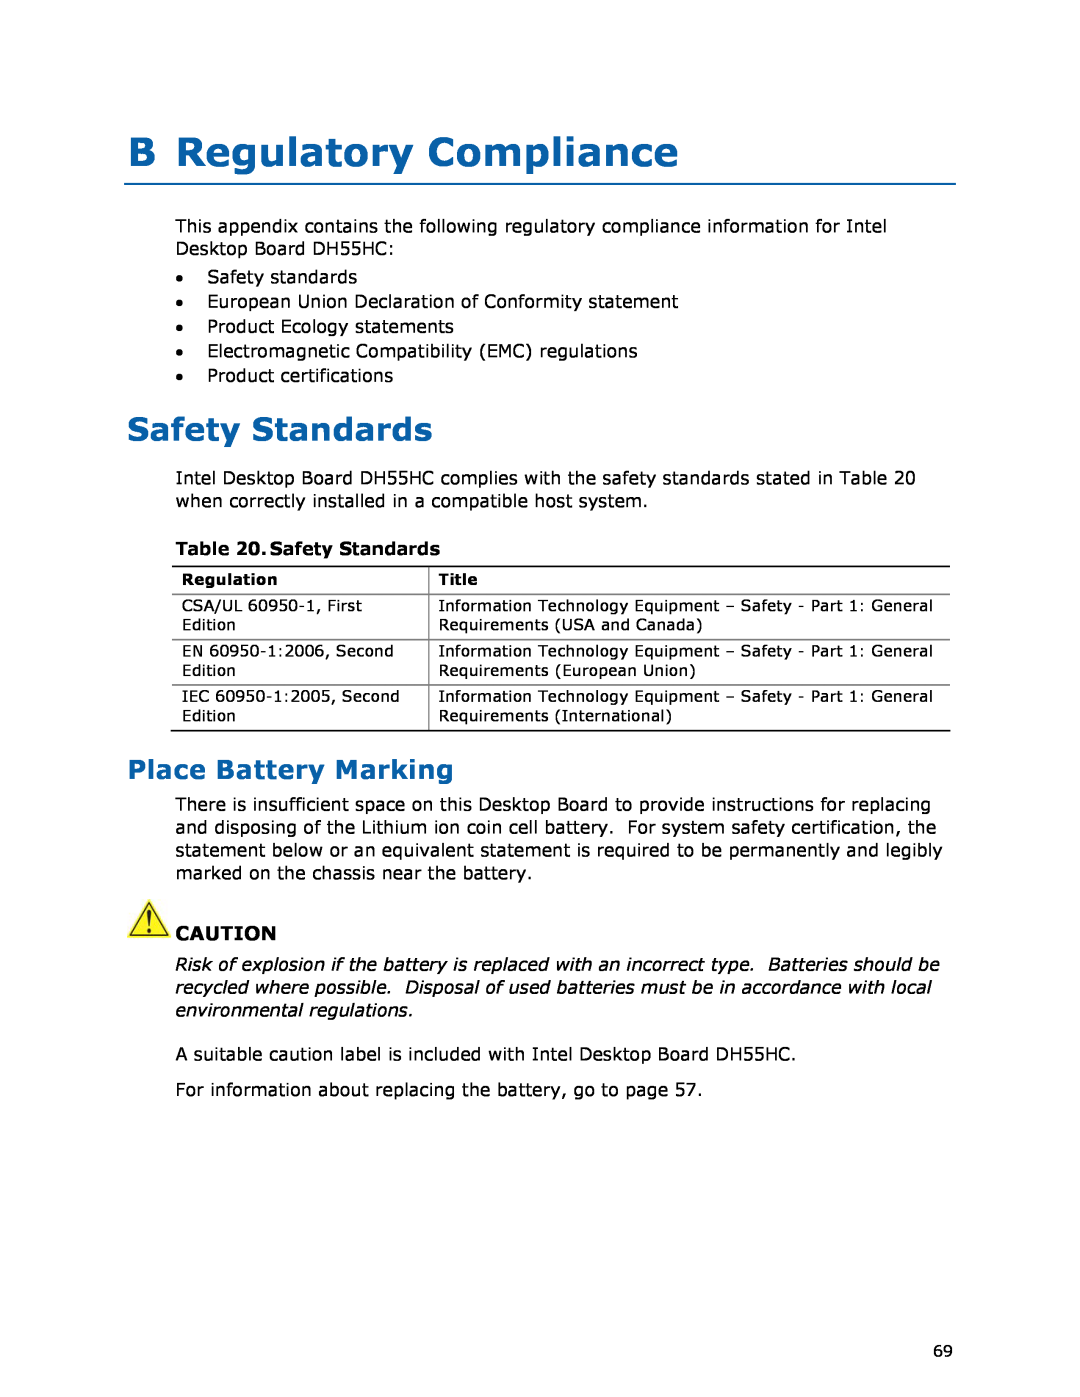 Intel BOXDH55HC manual B Regulatory Compliance, Safety Standards, Place Battery Marking 